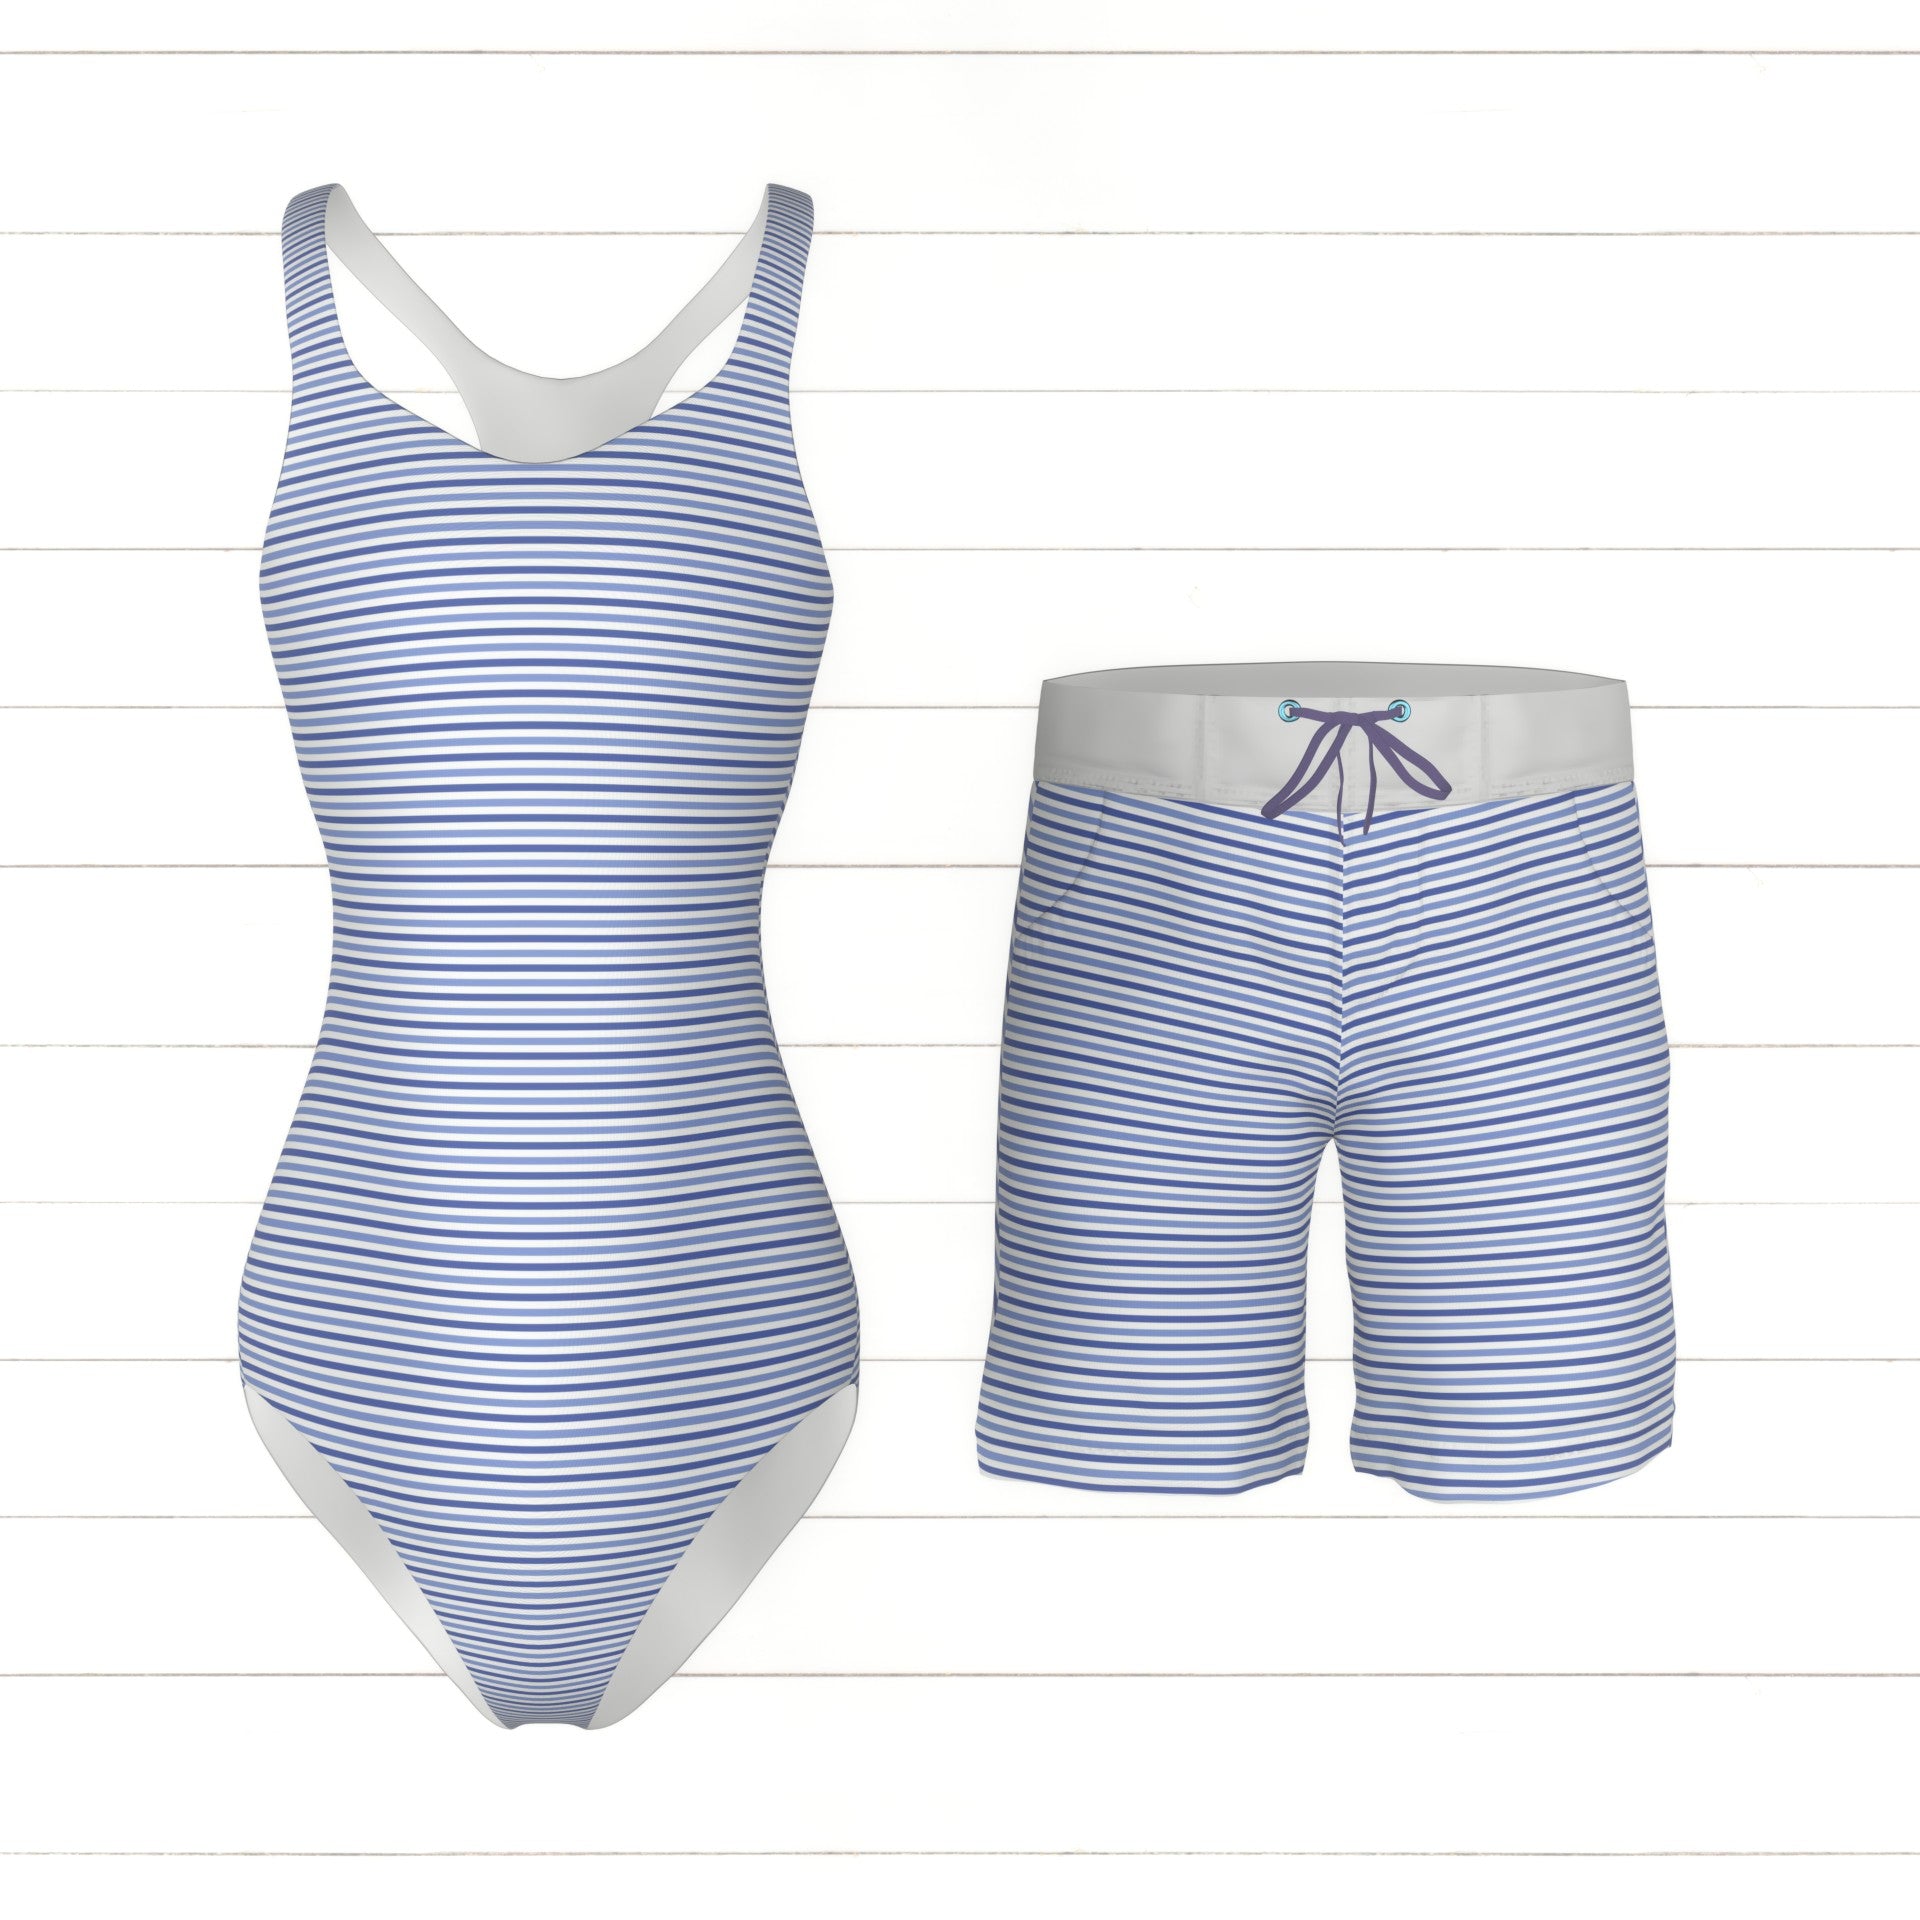 Blue and Light Blue Horizontal Stripes, Lavender Season Collection Fabric, Raspberry Creek Fabrics